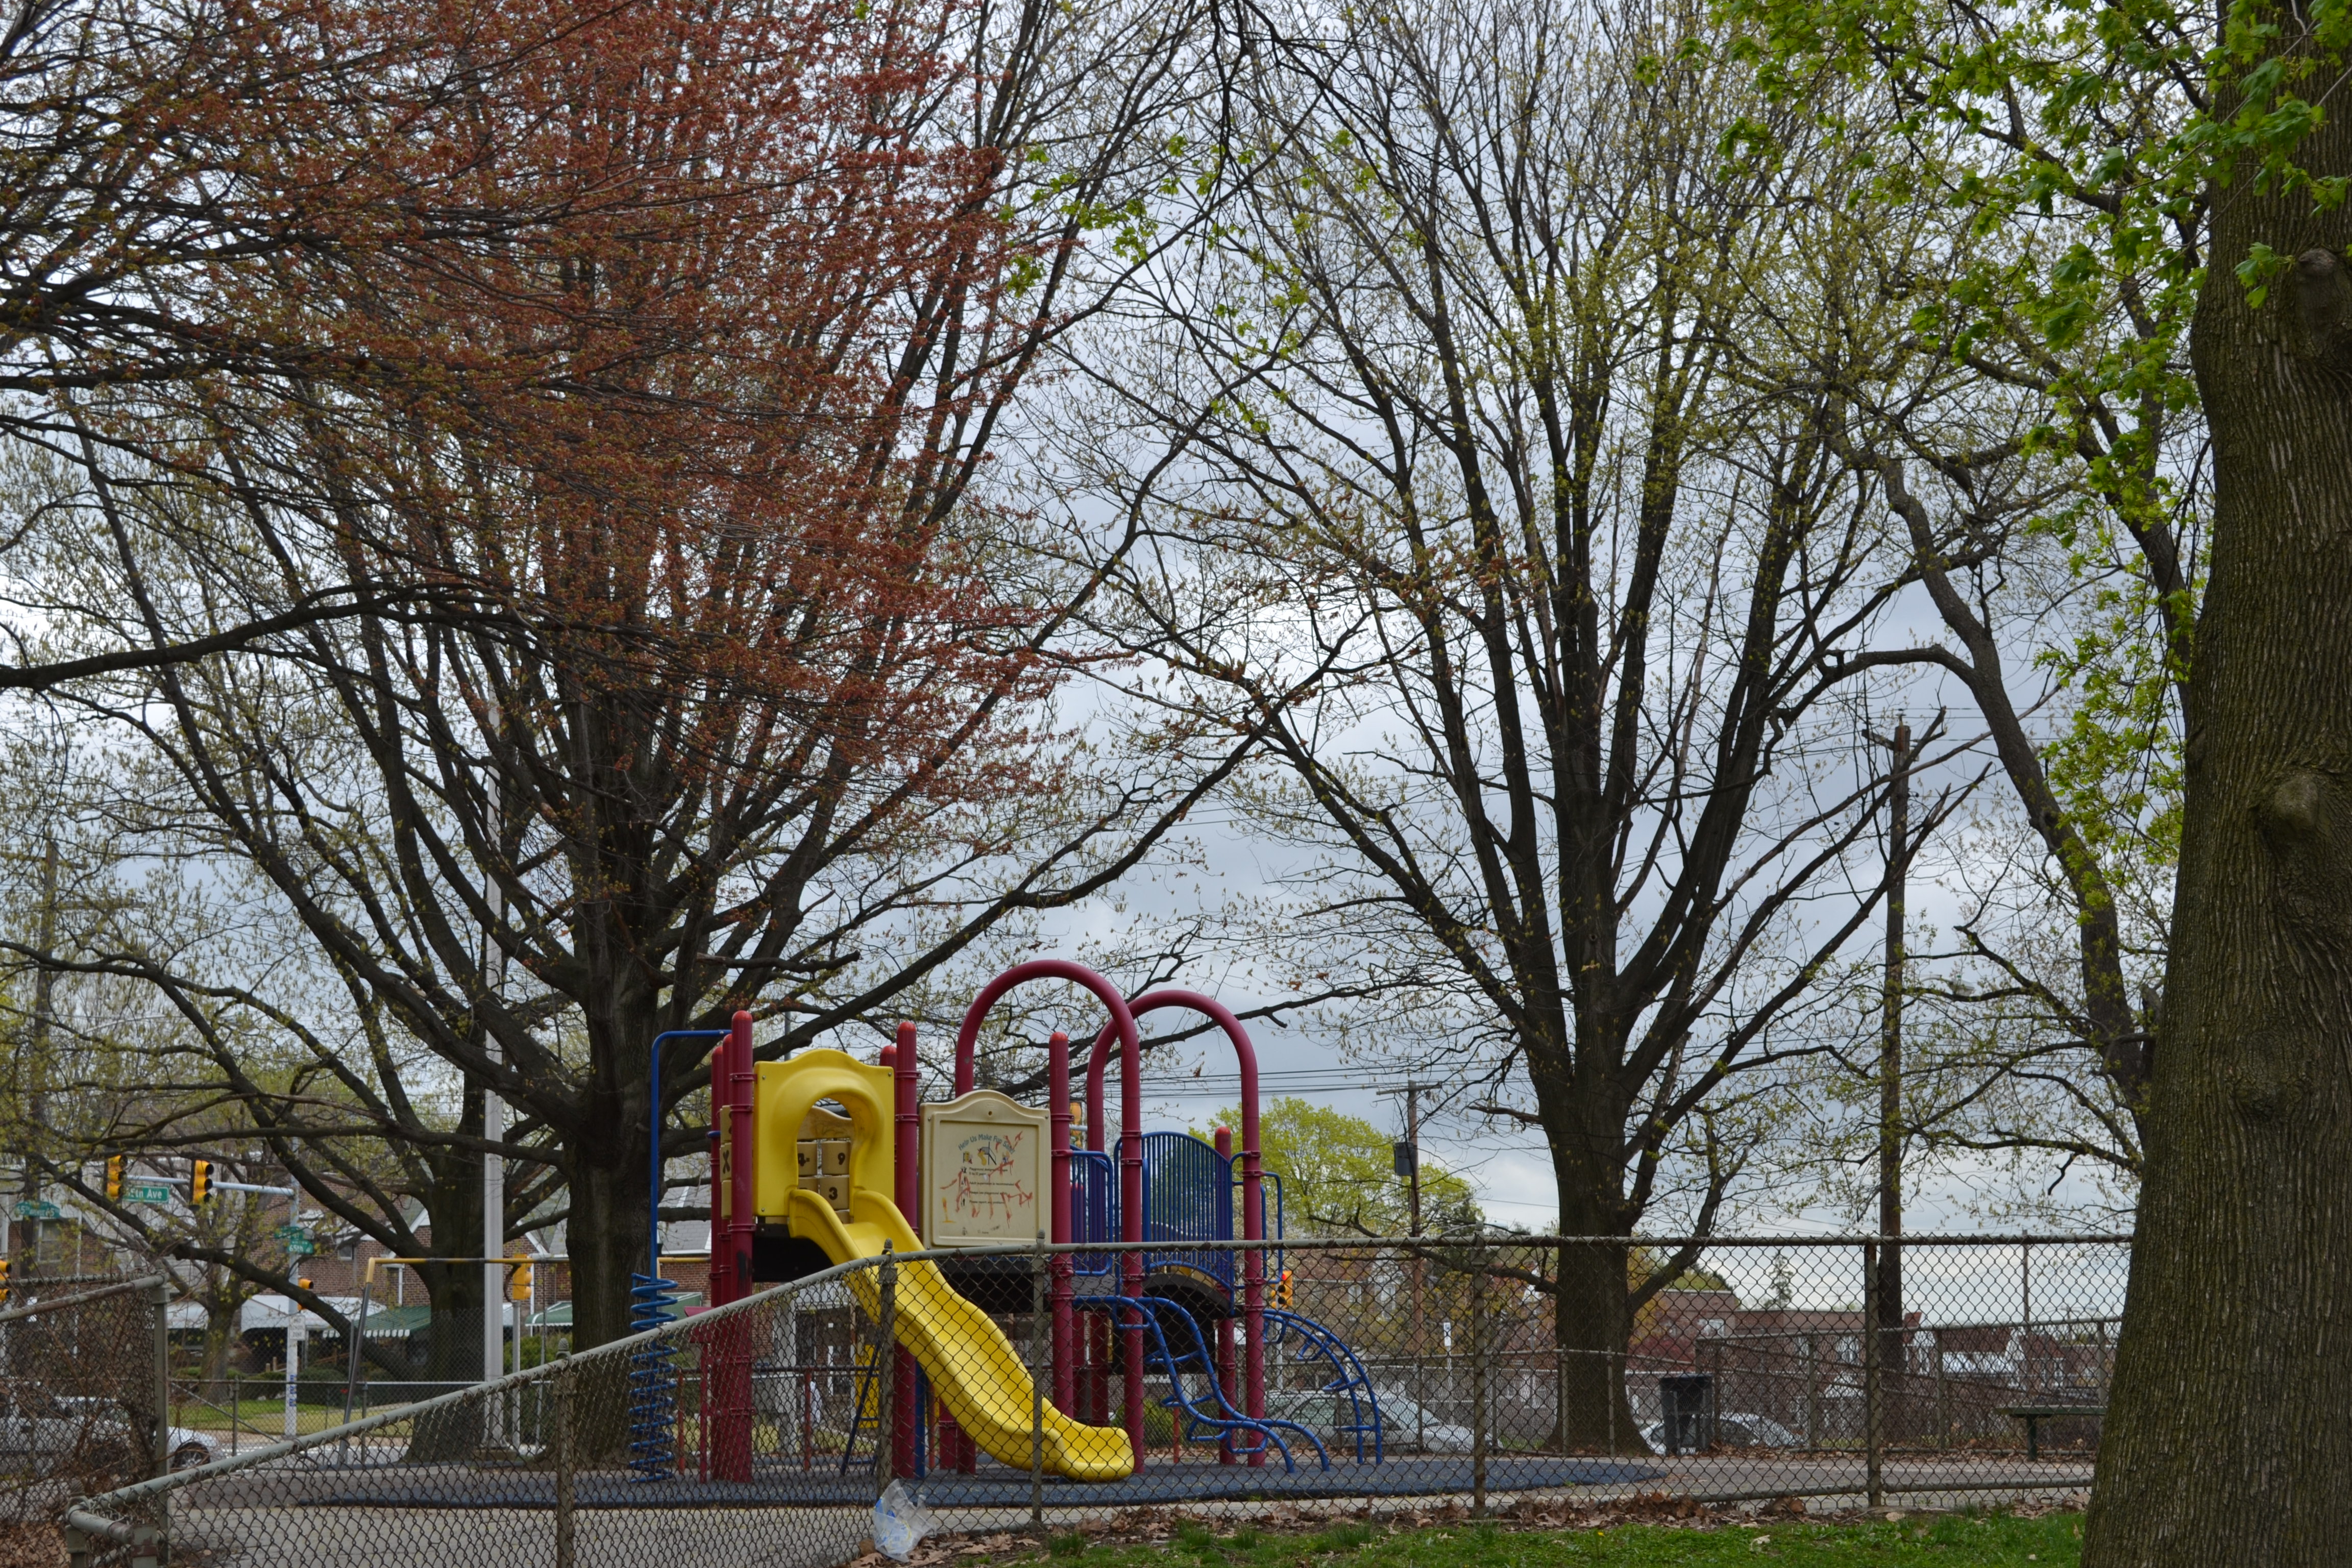 Sturgis Playground now has two main areas of playground equipment